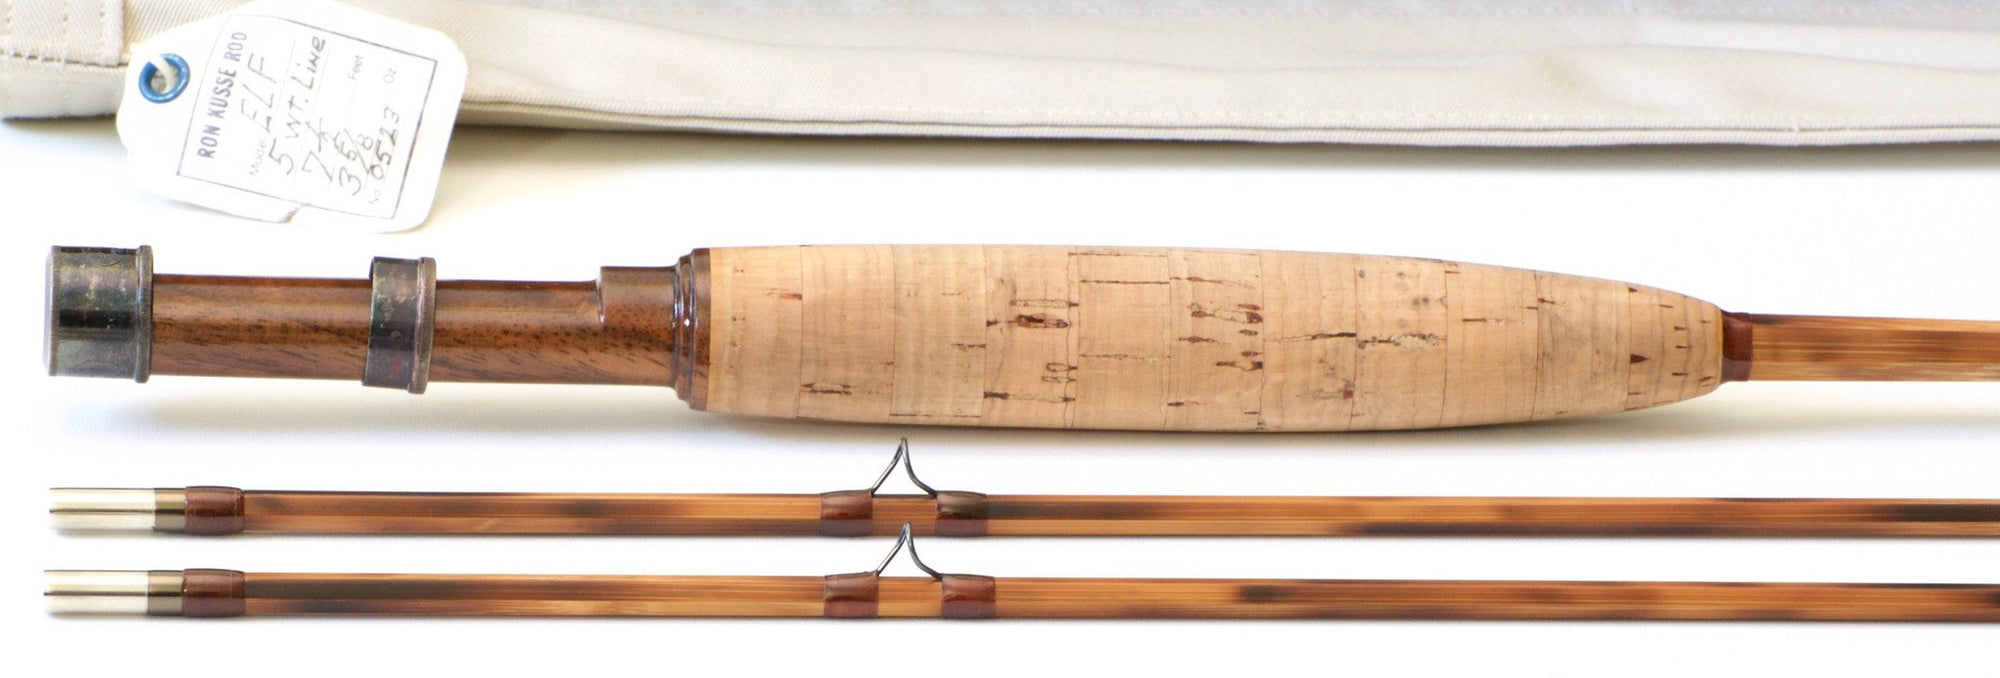 Ron Kusse Elf Model 7'6 5wt Bamboo Rod 